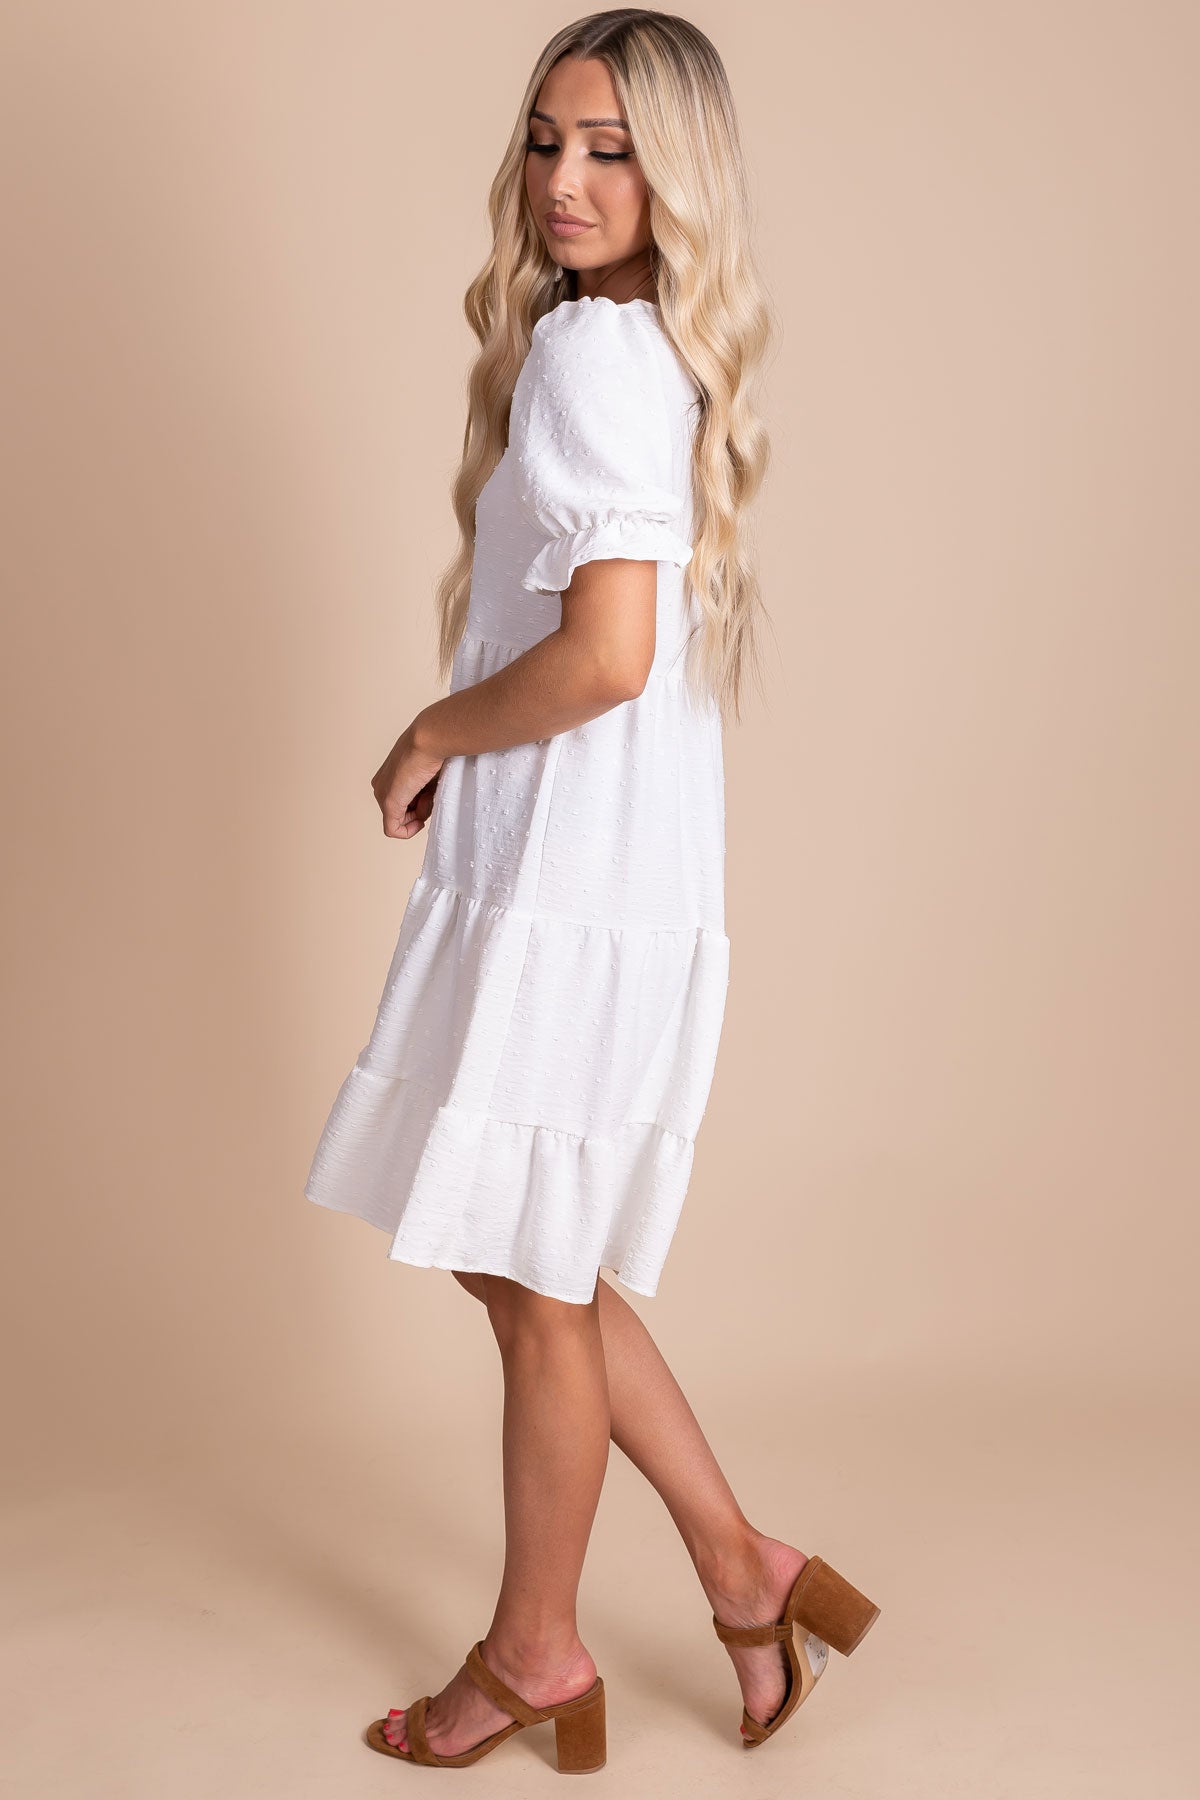 Pursuit of Happiness Textured Mini Dress | Women's White Mini Dress ...